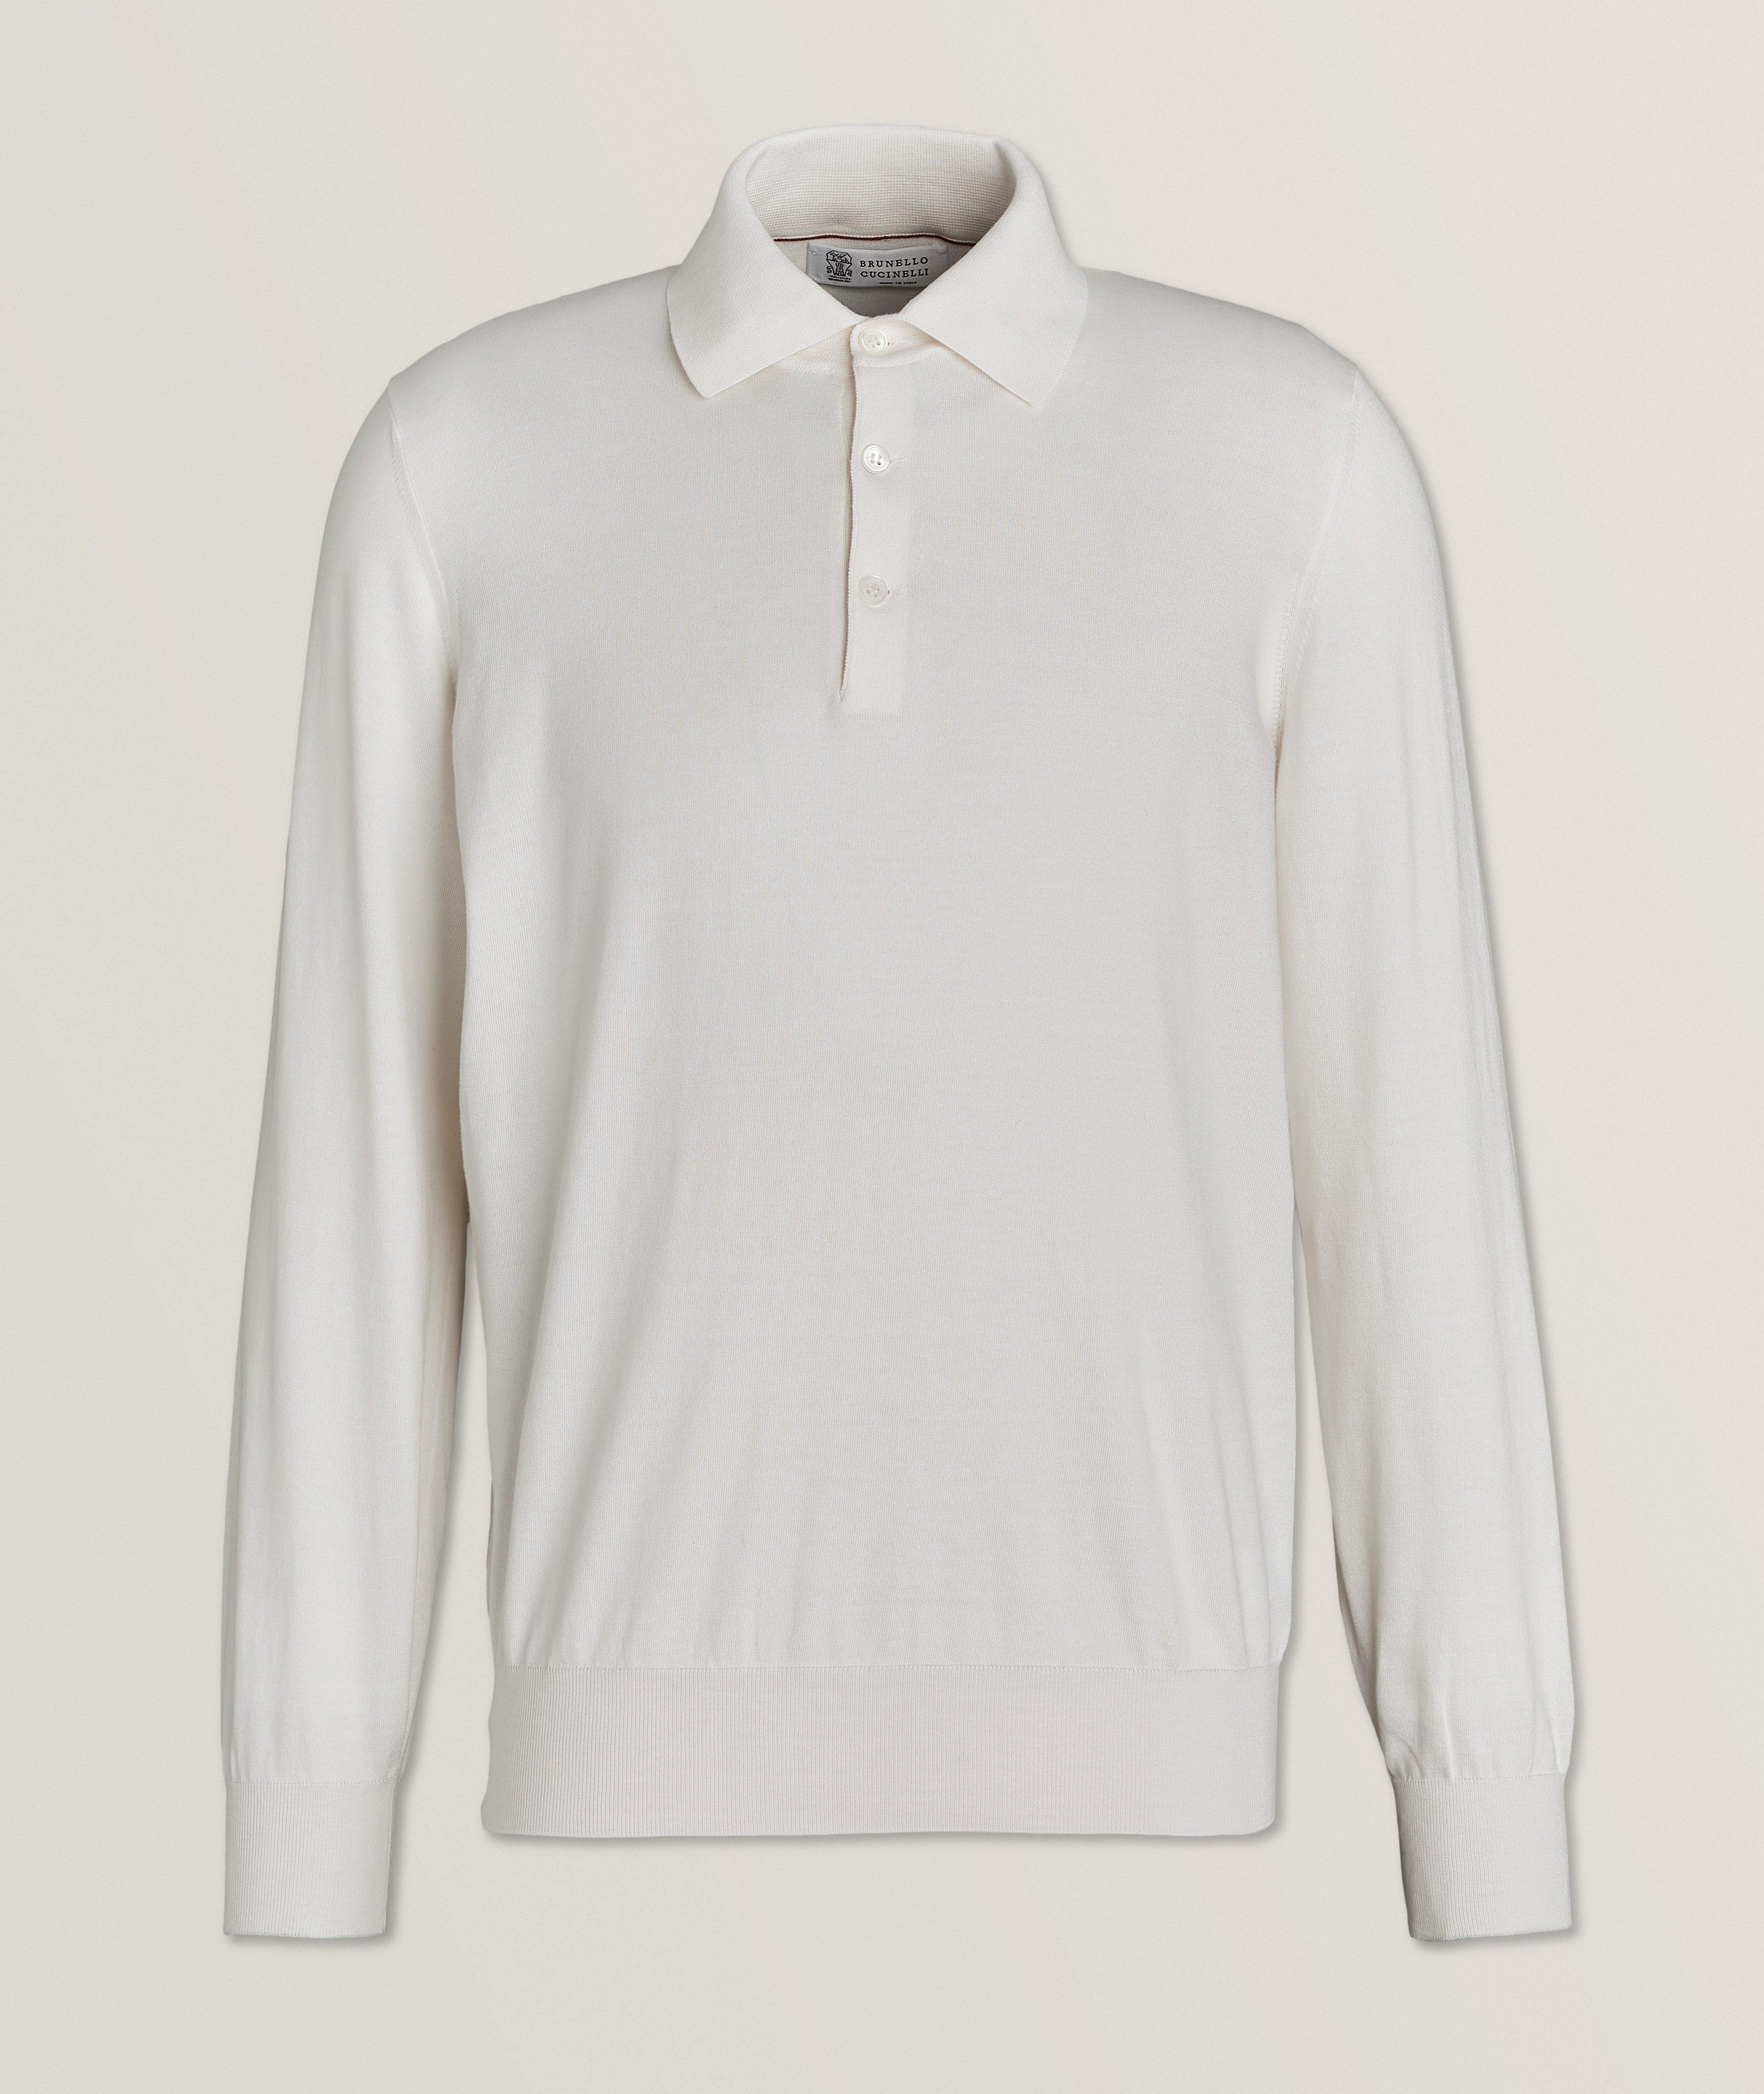 Long-Sleeve Cotton Polo image 0